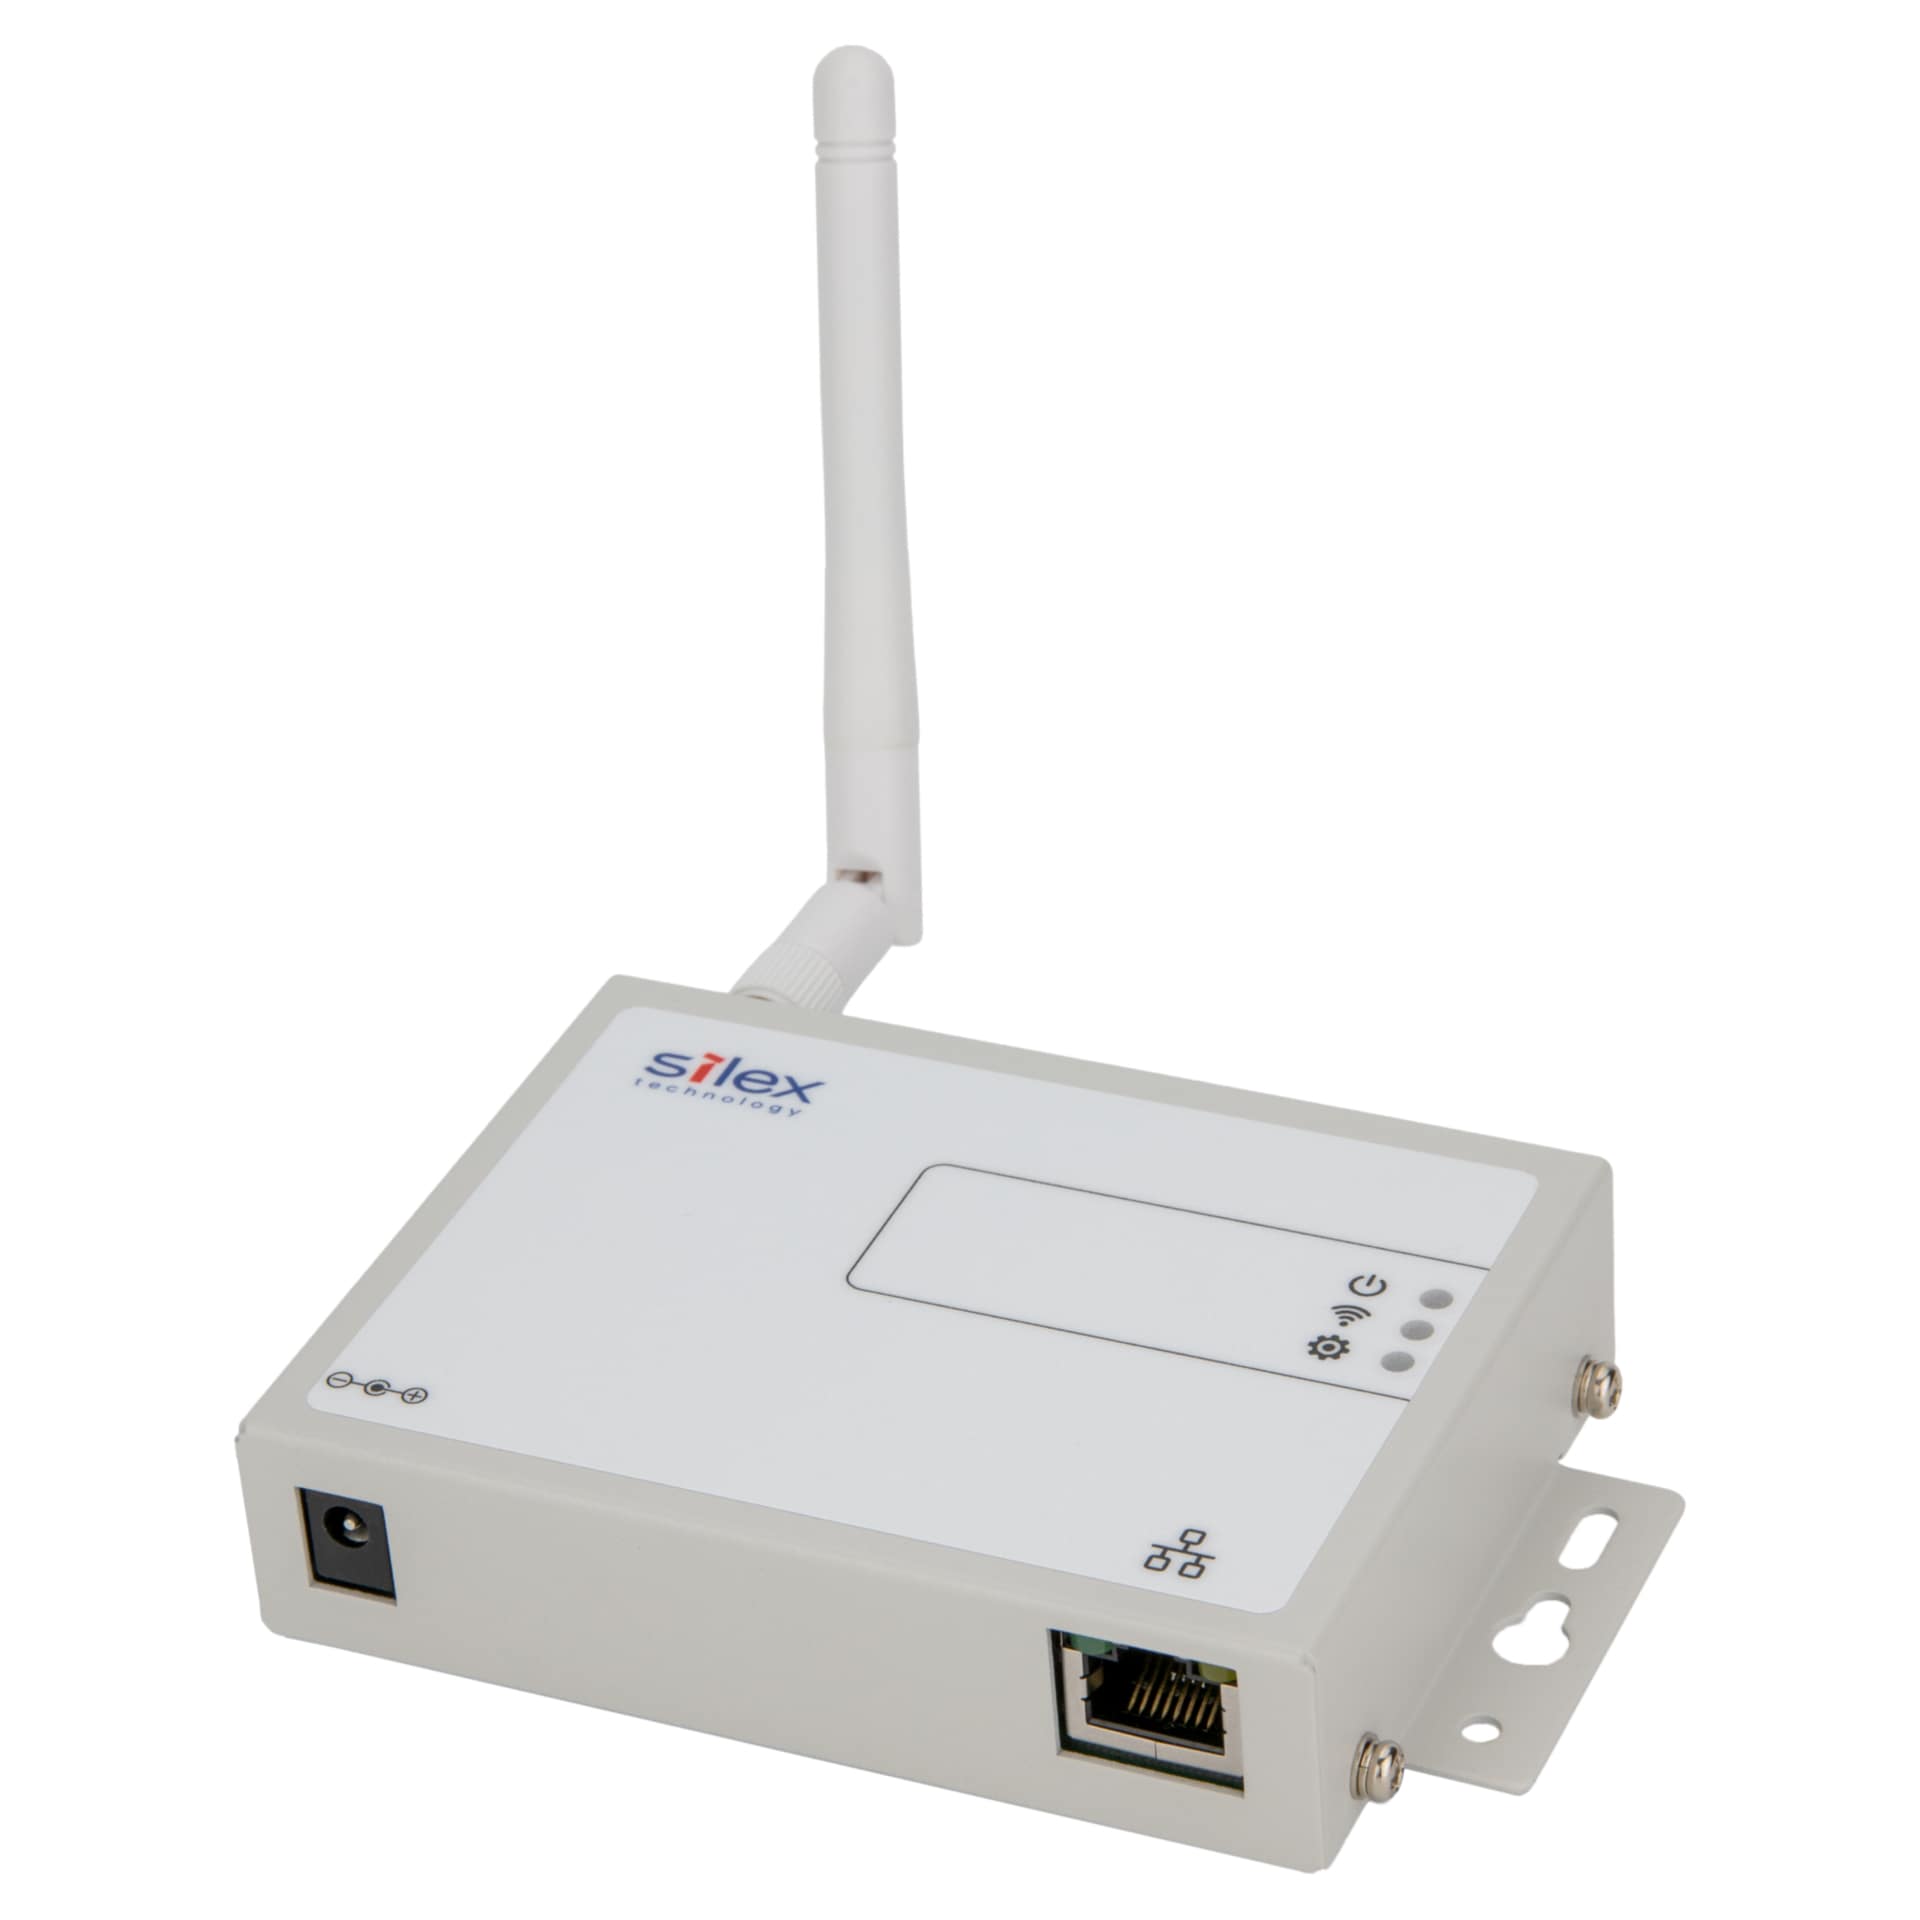 Silex Low Power Ethernet to Wi-Fi Bridge Access Point